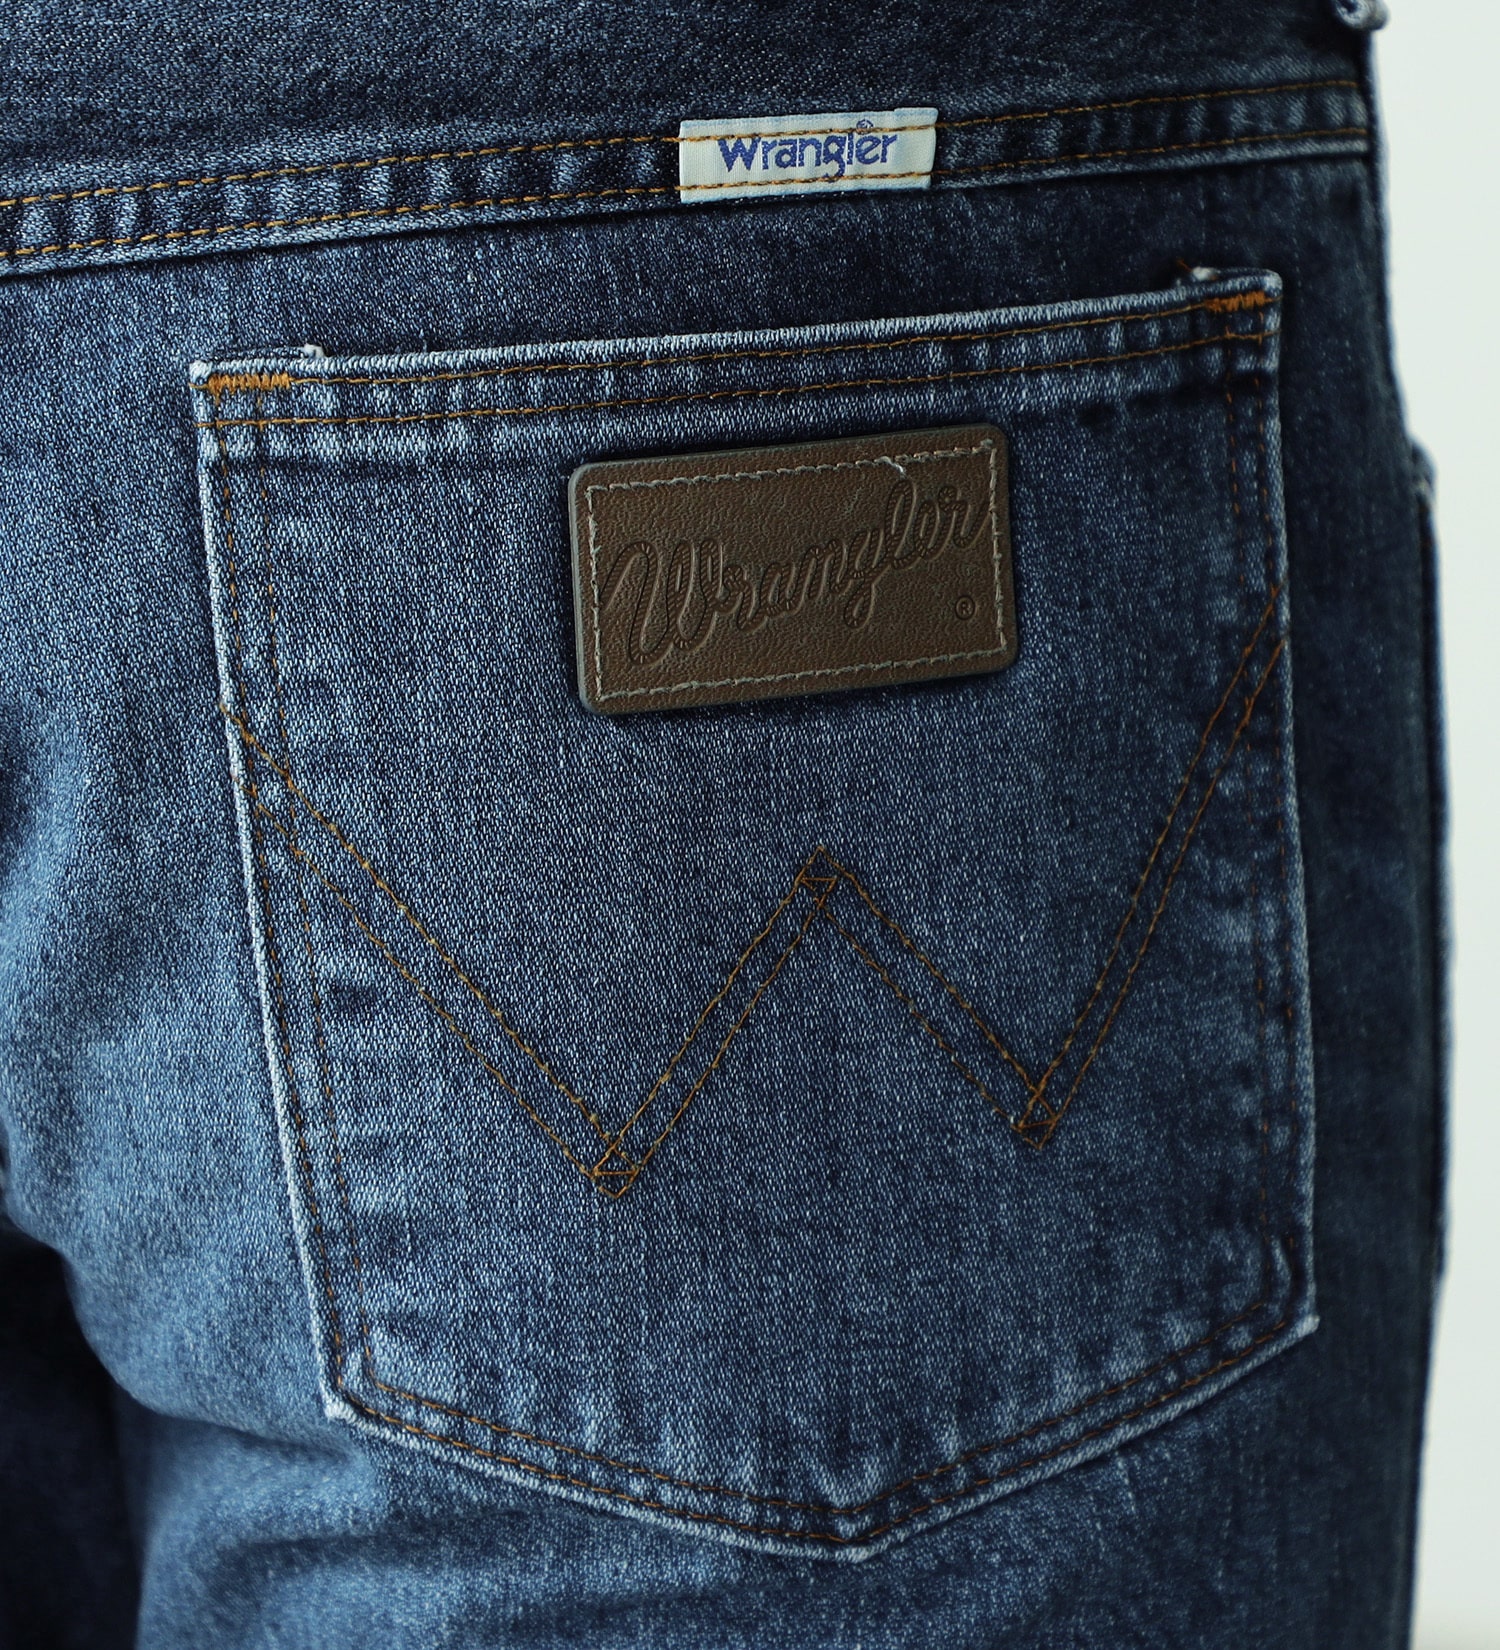 Wrangler(ラングラー)のベルボトム|パンツ/デニムパンツ/メンズ|中色ブルー